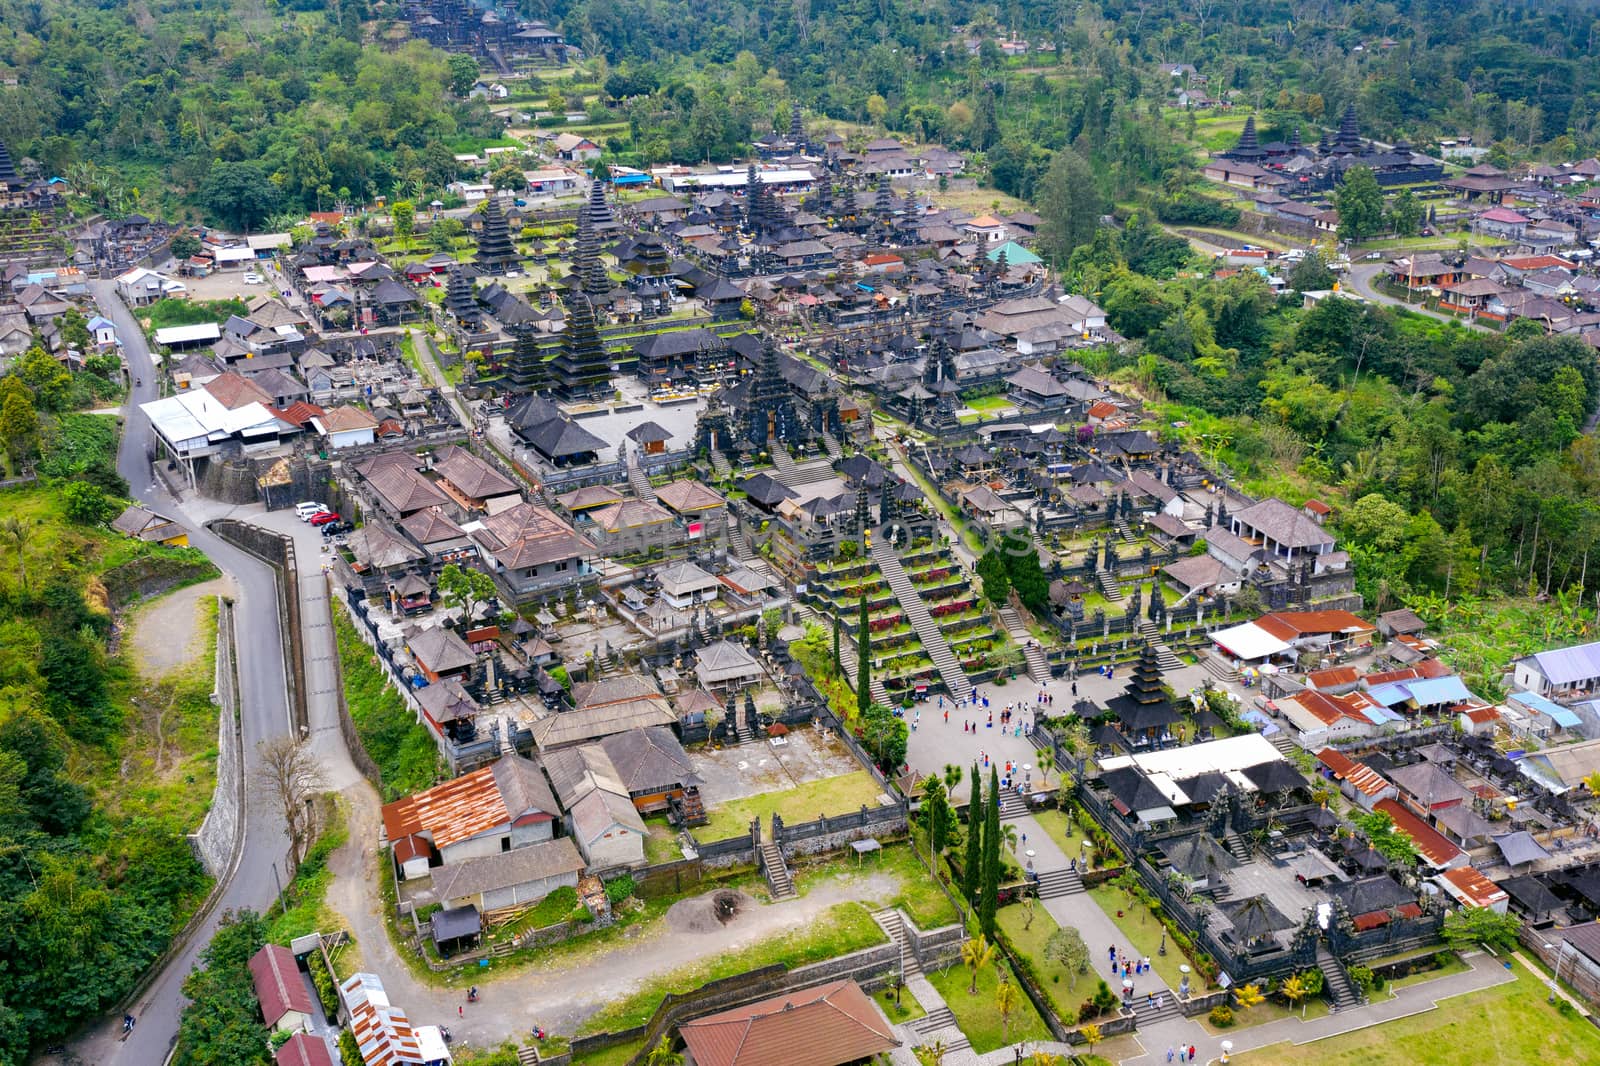 Aerial view of Besakih temple in Bali, Indonesia.